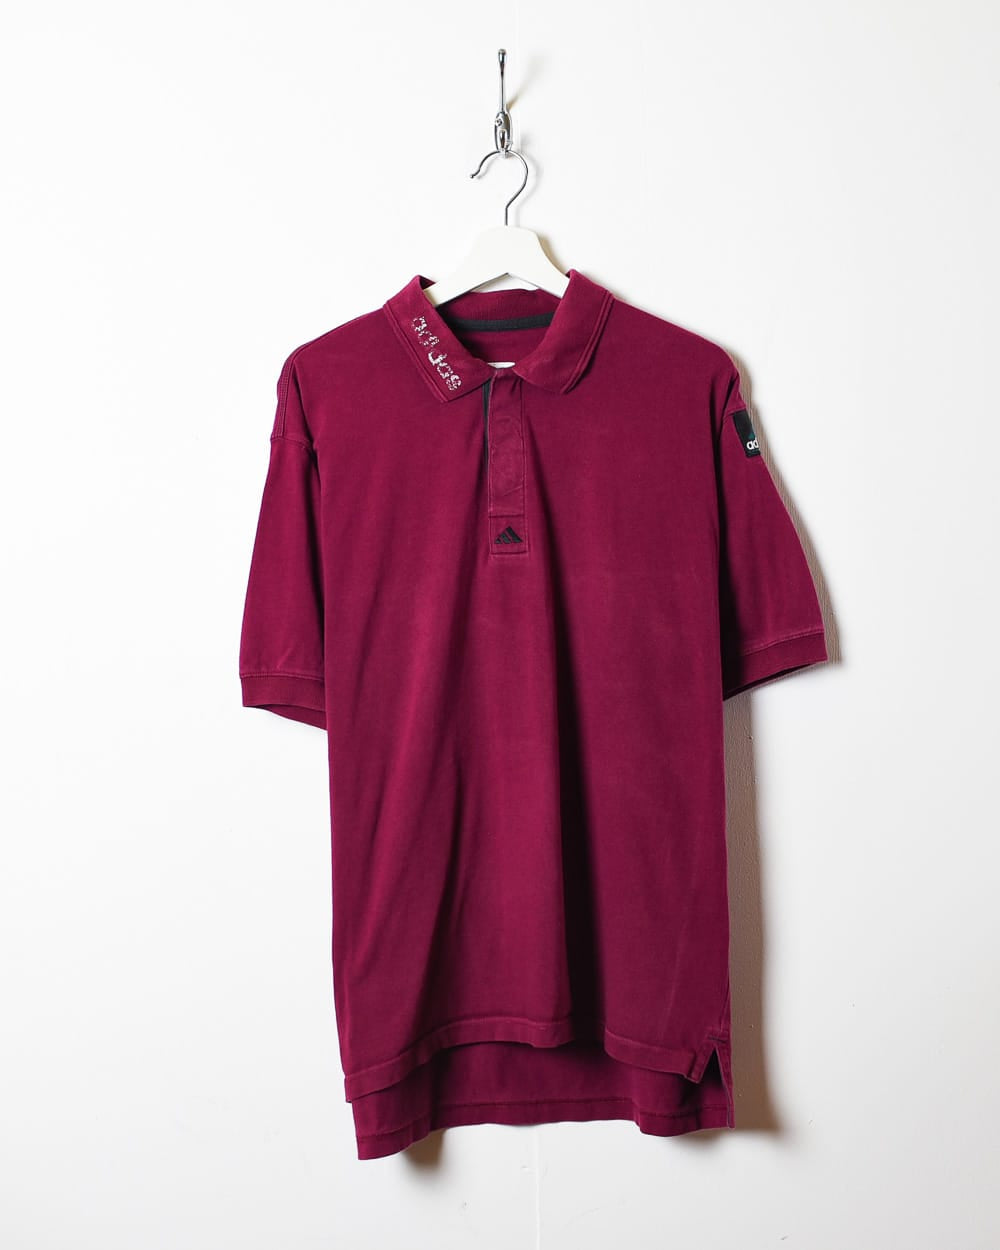 Maroon Adidas Equipment Polo Shirt - Large